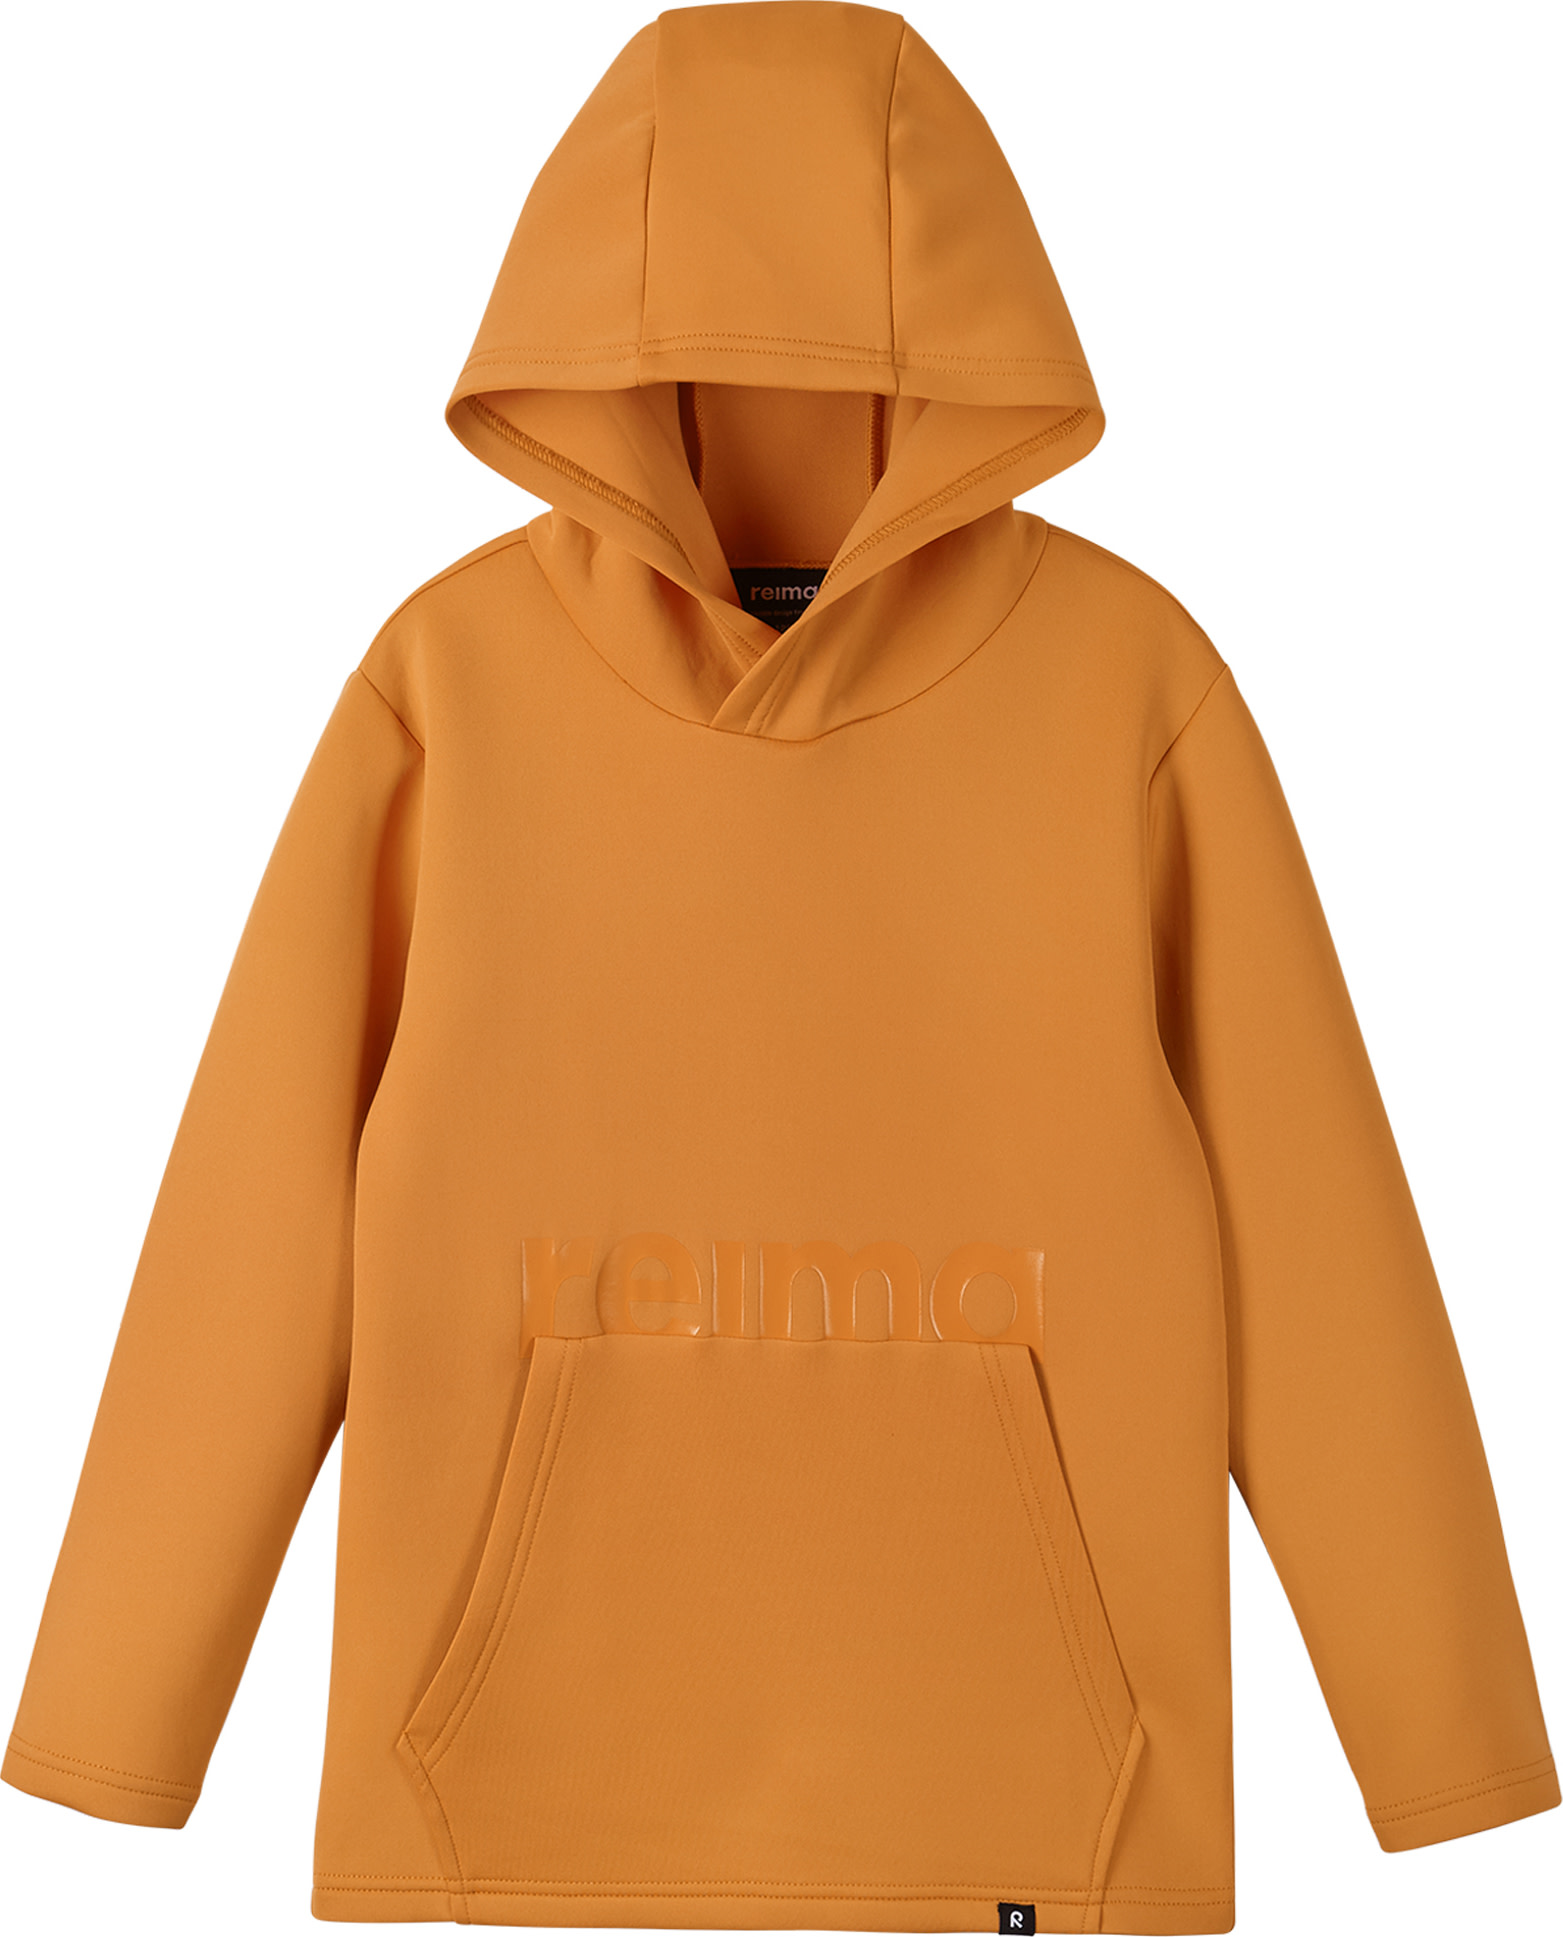 Reima Kids’ Sweater Toimekas Dark Orange 2840